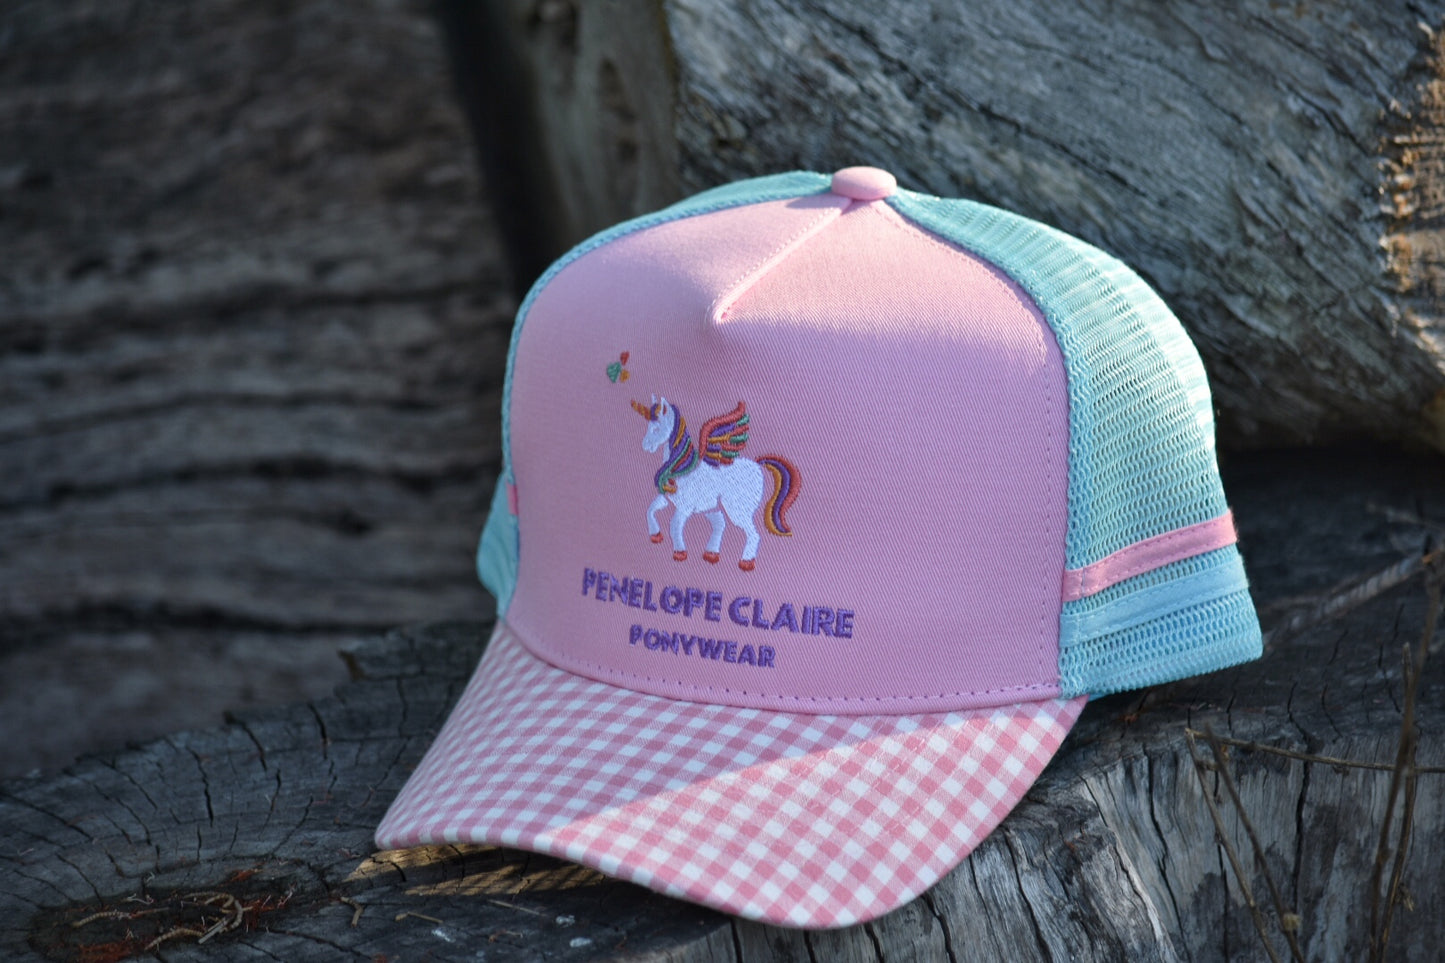 Penelope Claire Ponywear Trucker Cap